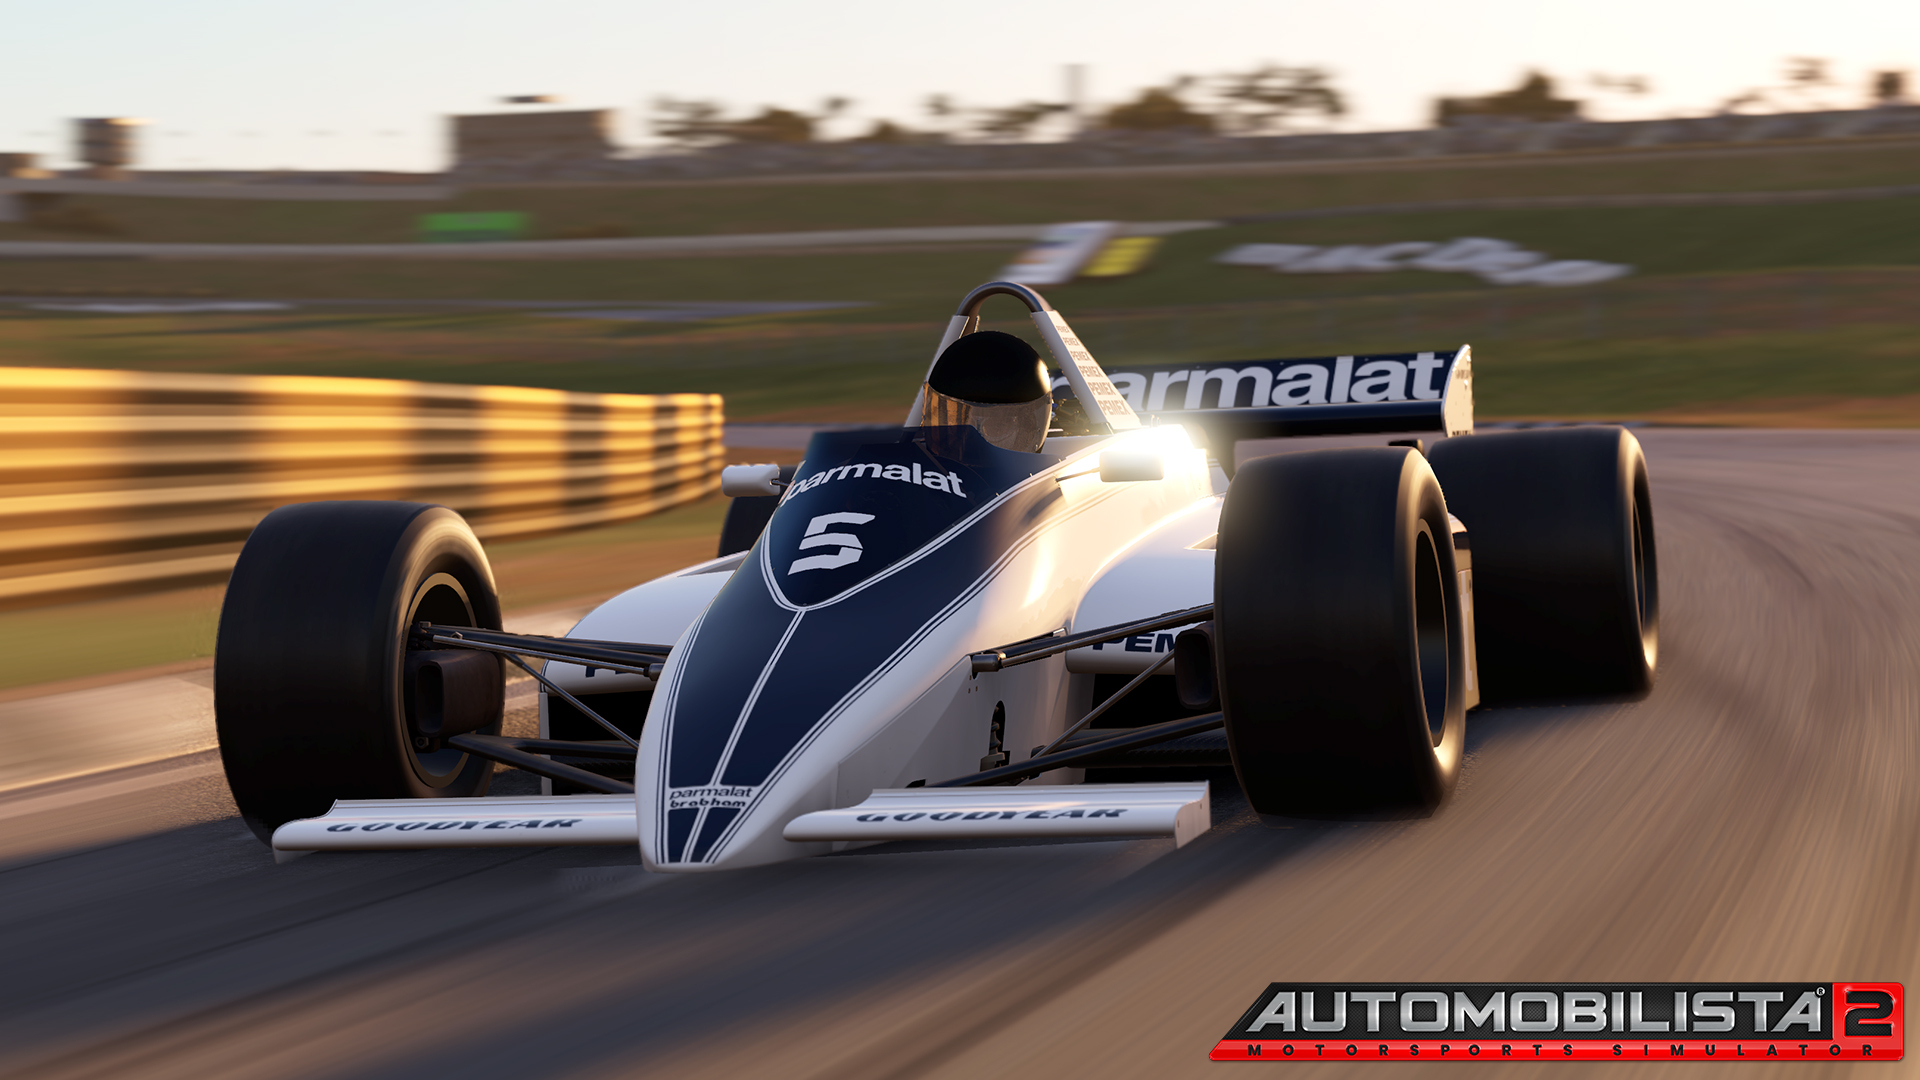 Brabham F1 'Fan-car' BT46B  Articles - Trackside Legends